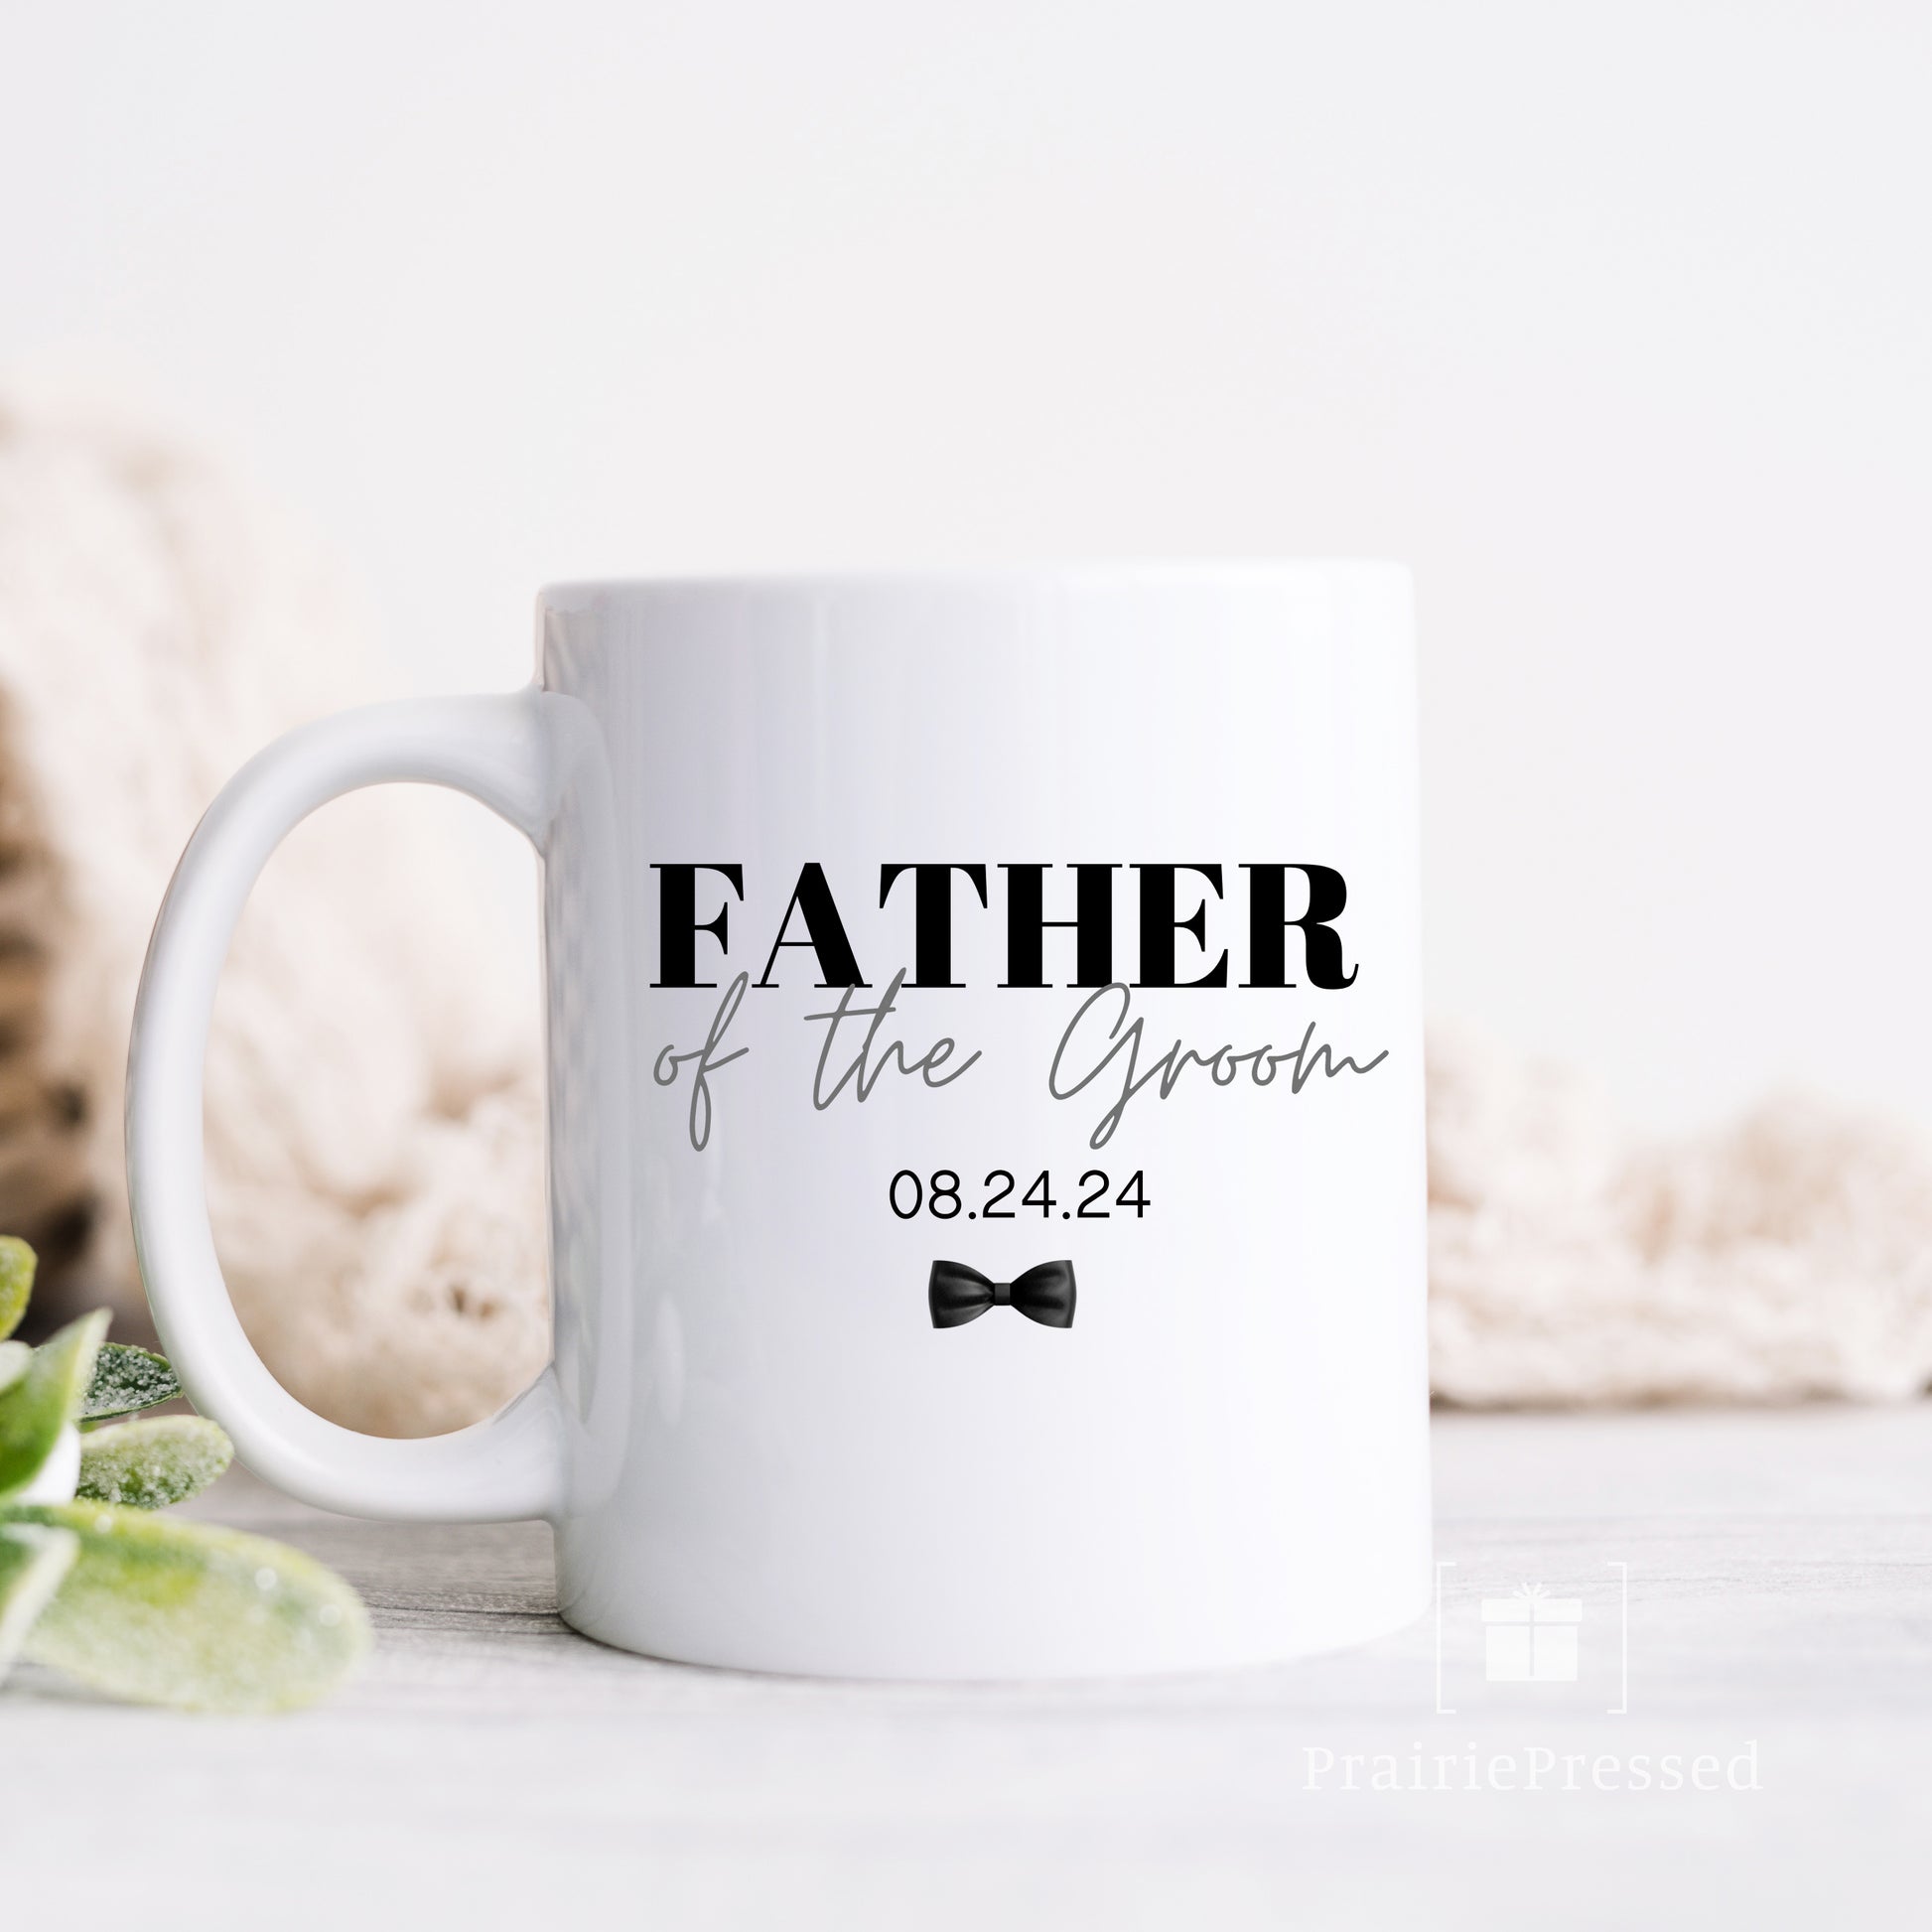 Father of the Groom Ceramic Wedding Mug